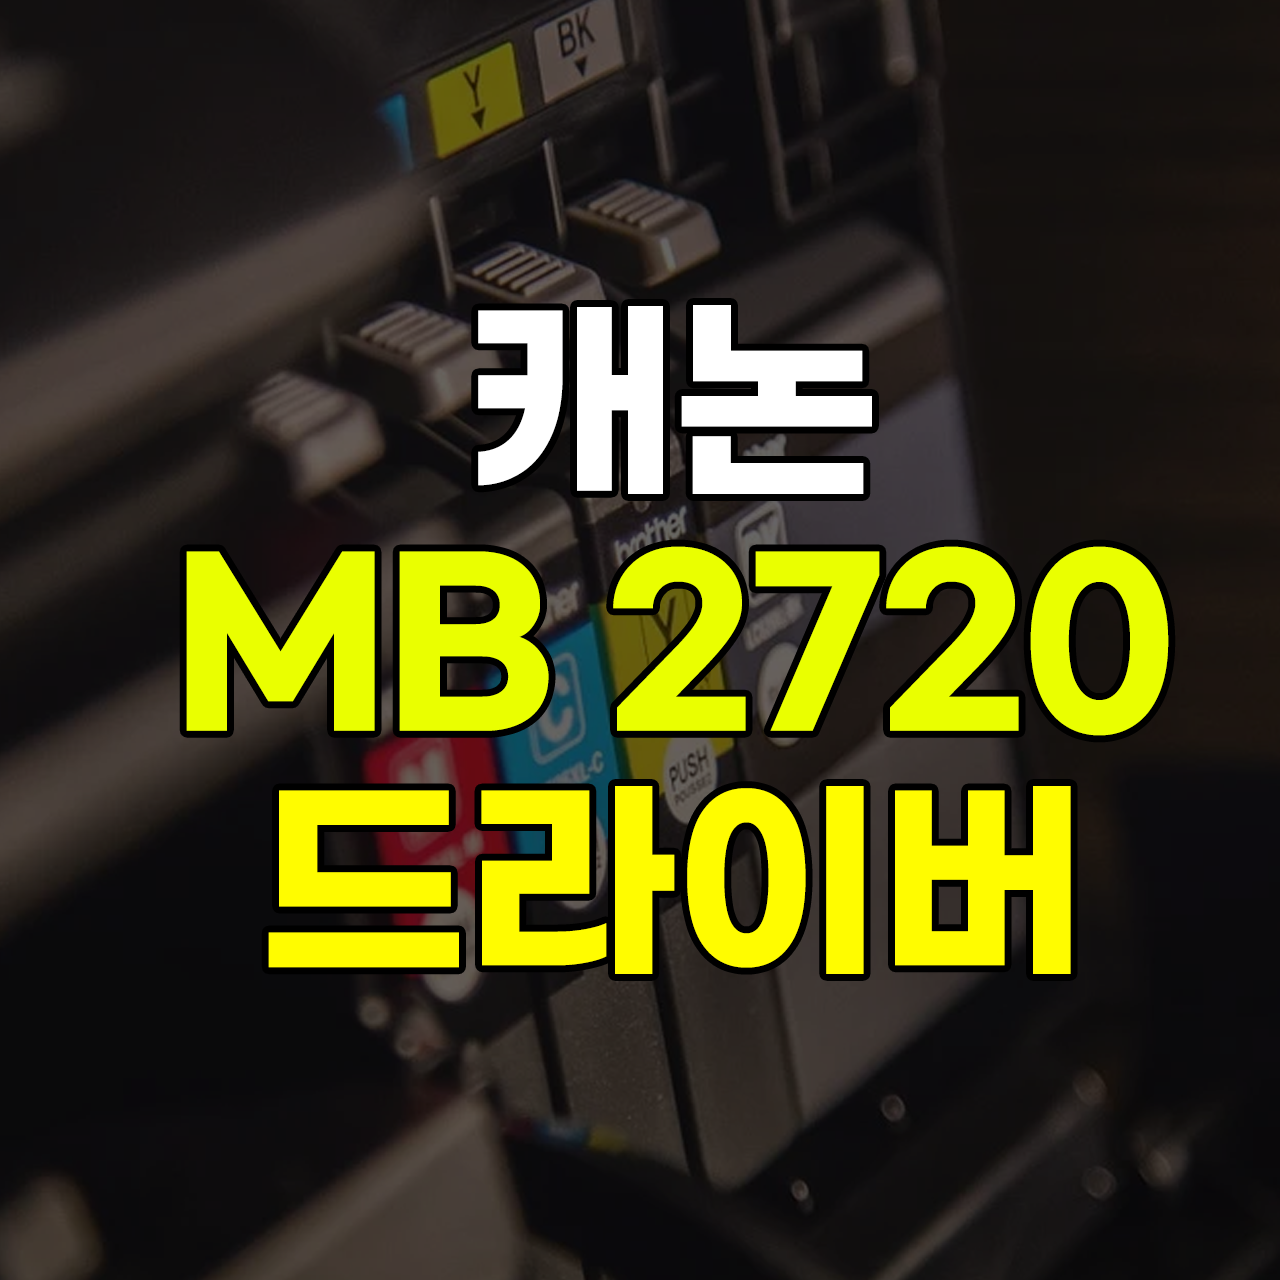 mb2720-driver